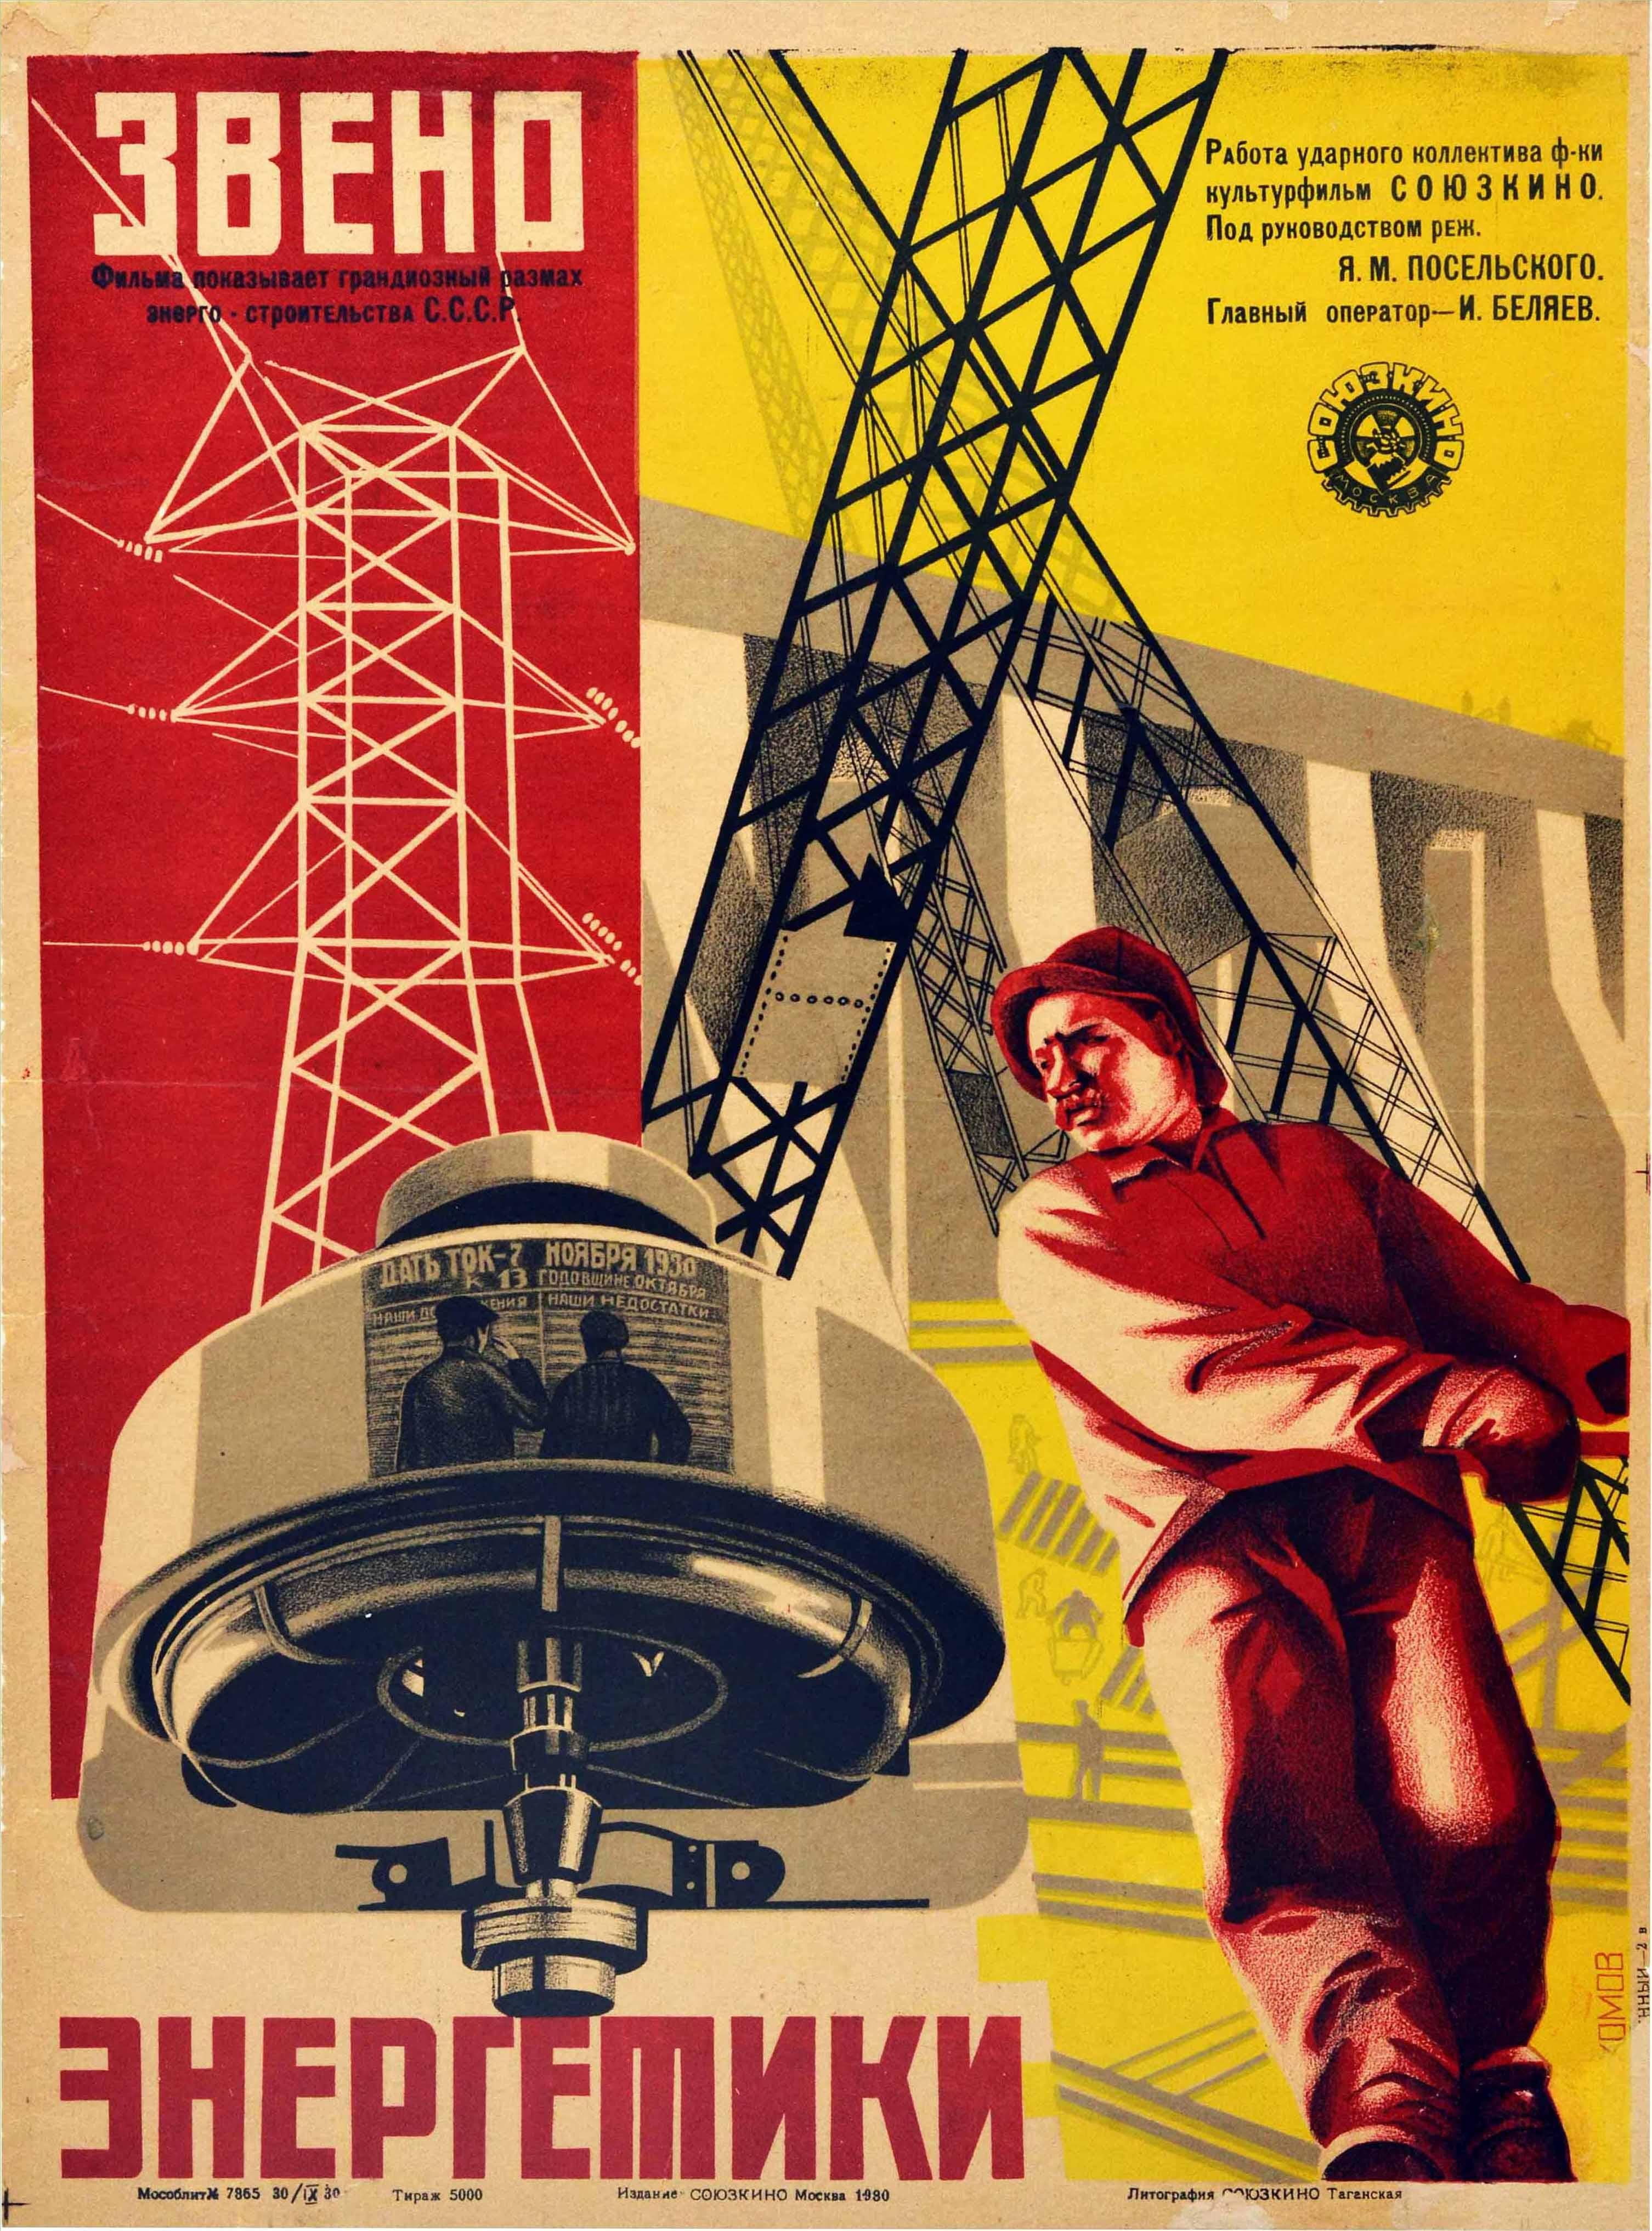 Original Vintage Soviet Documentary Film Poster Energy Link Construction Goals 